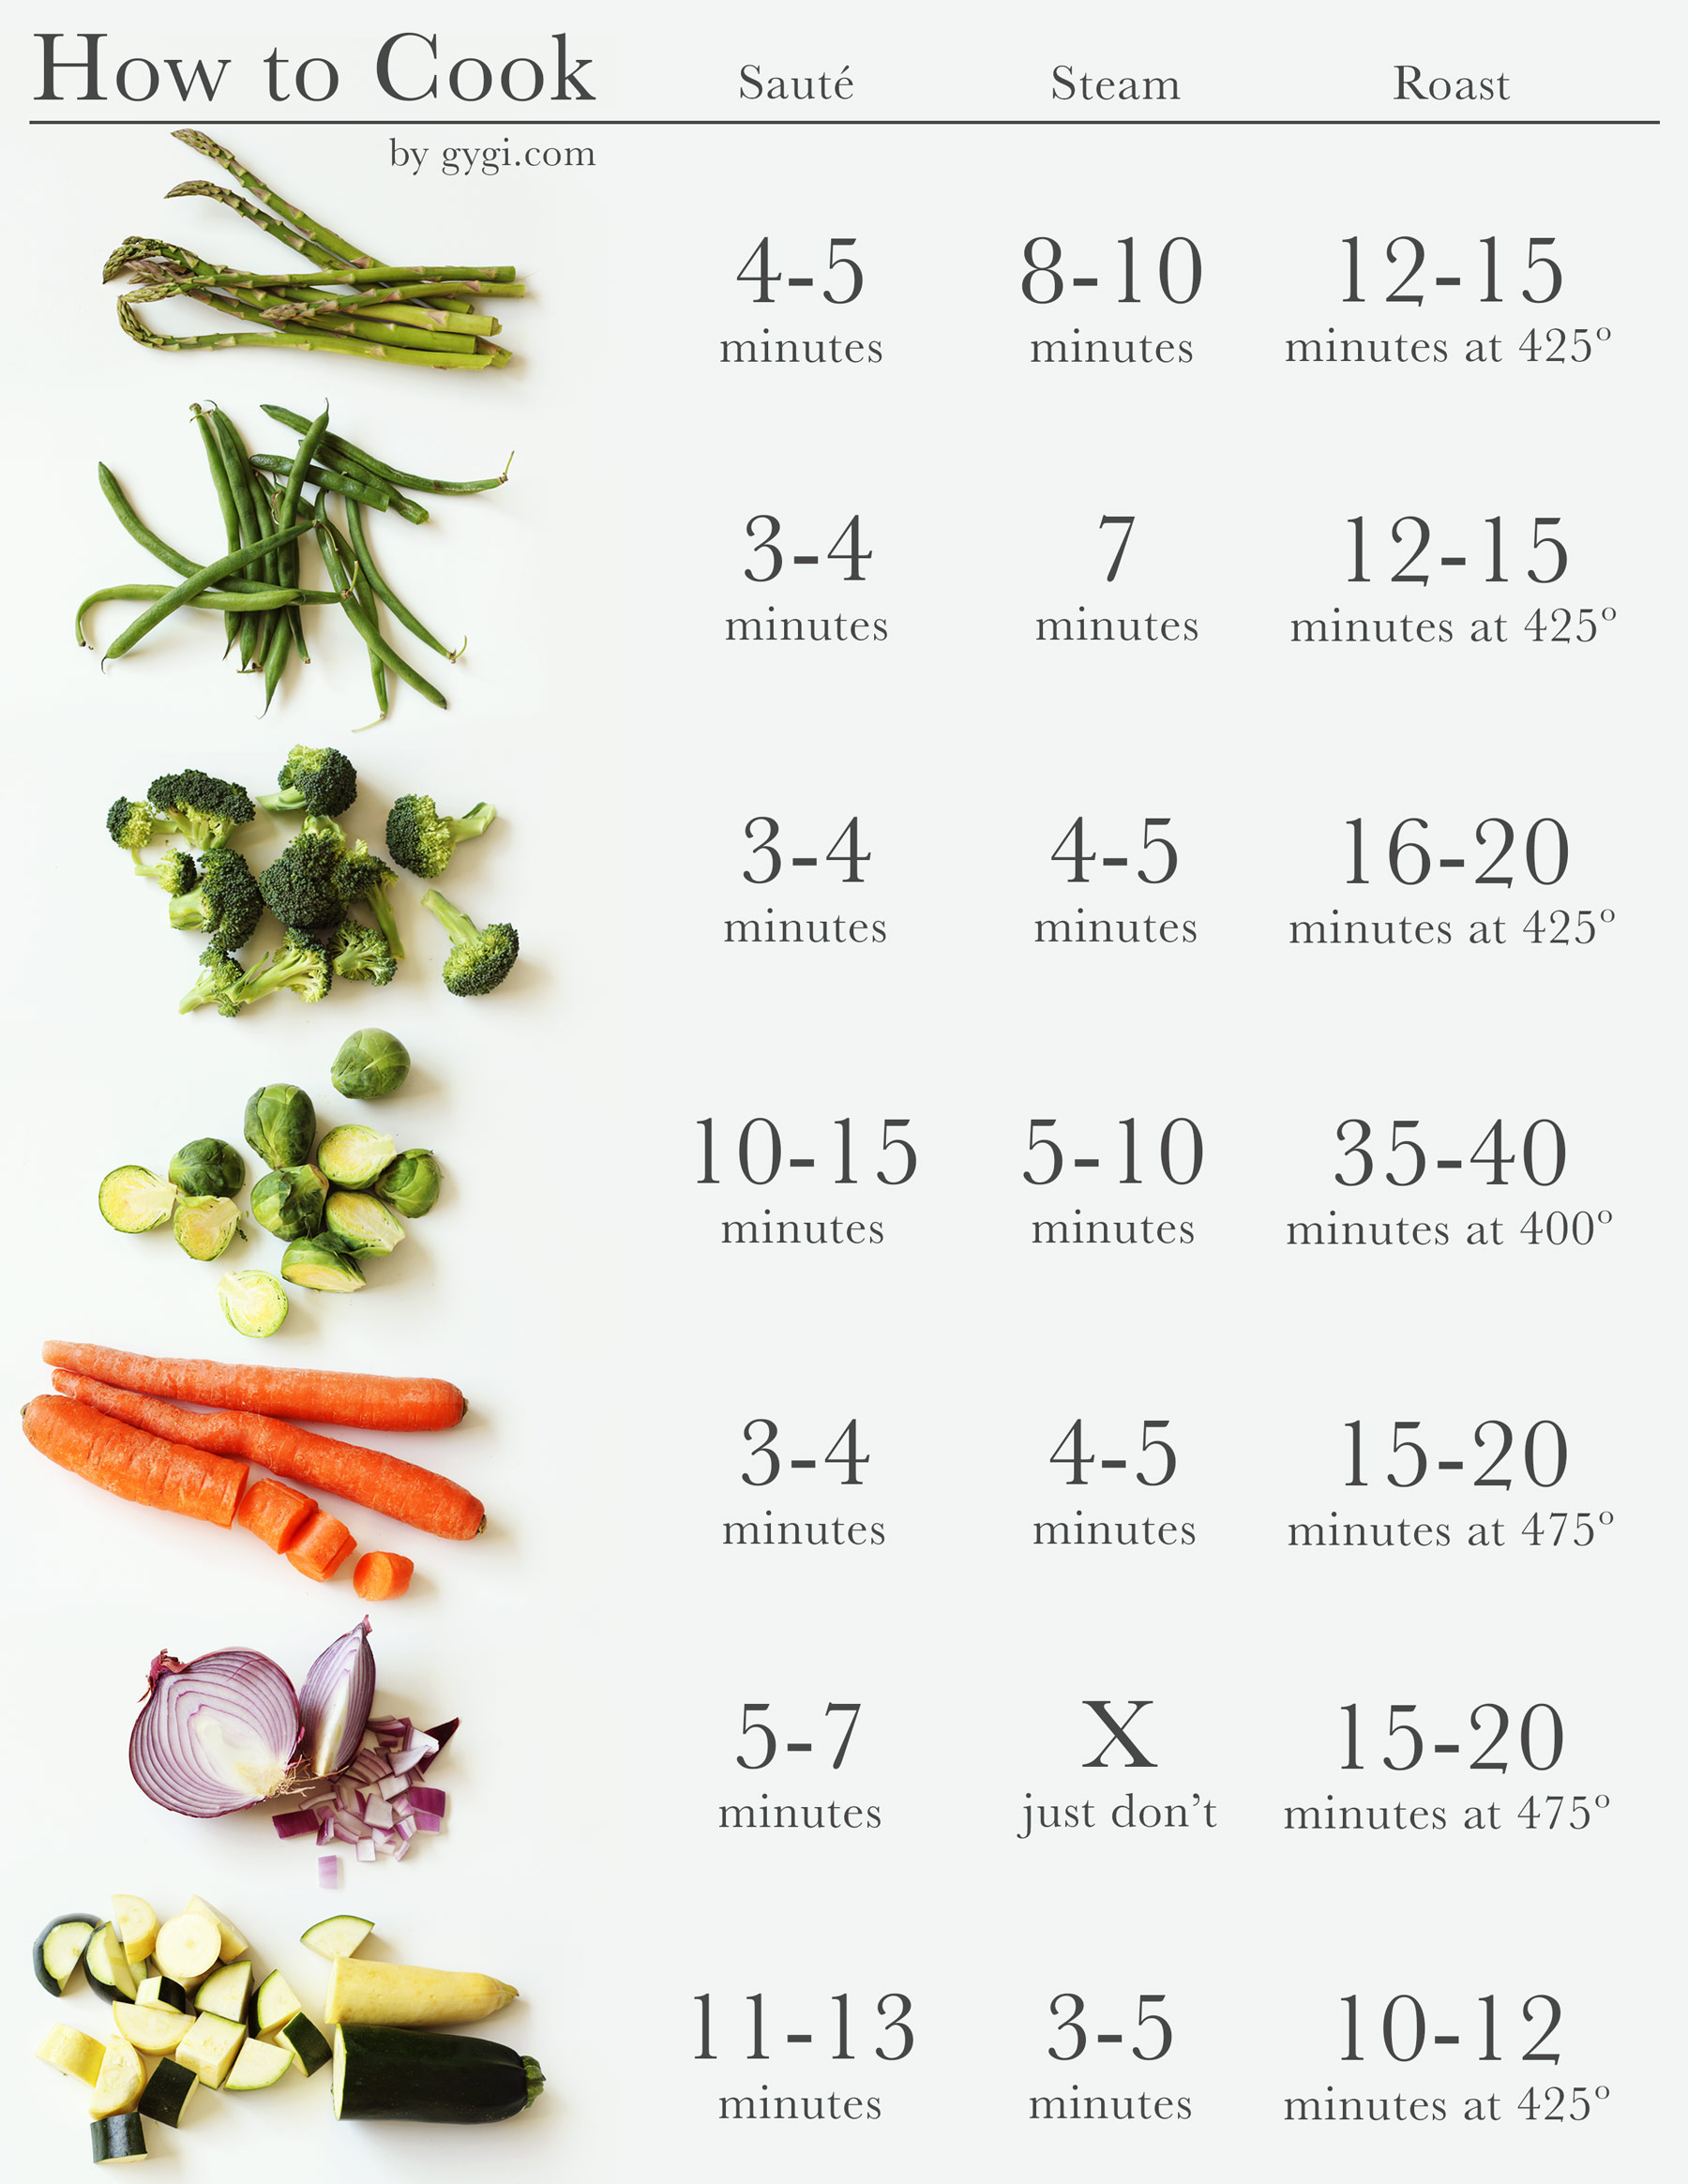 how-to-cook-veggies-infographic (6)